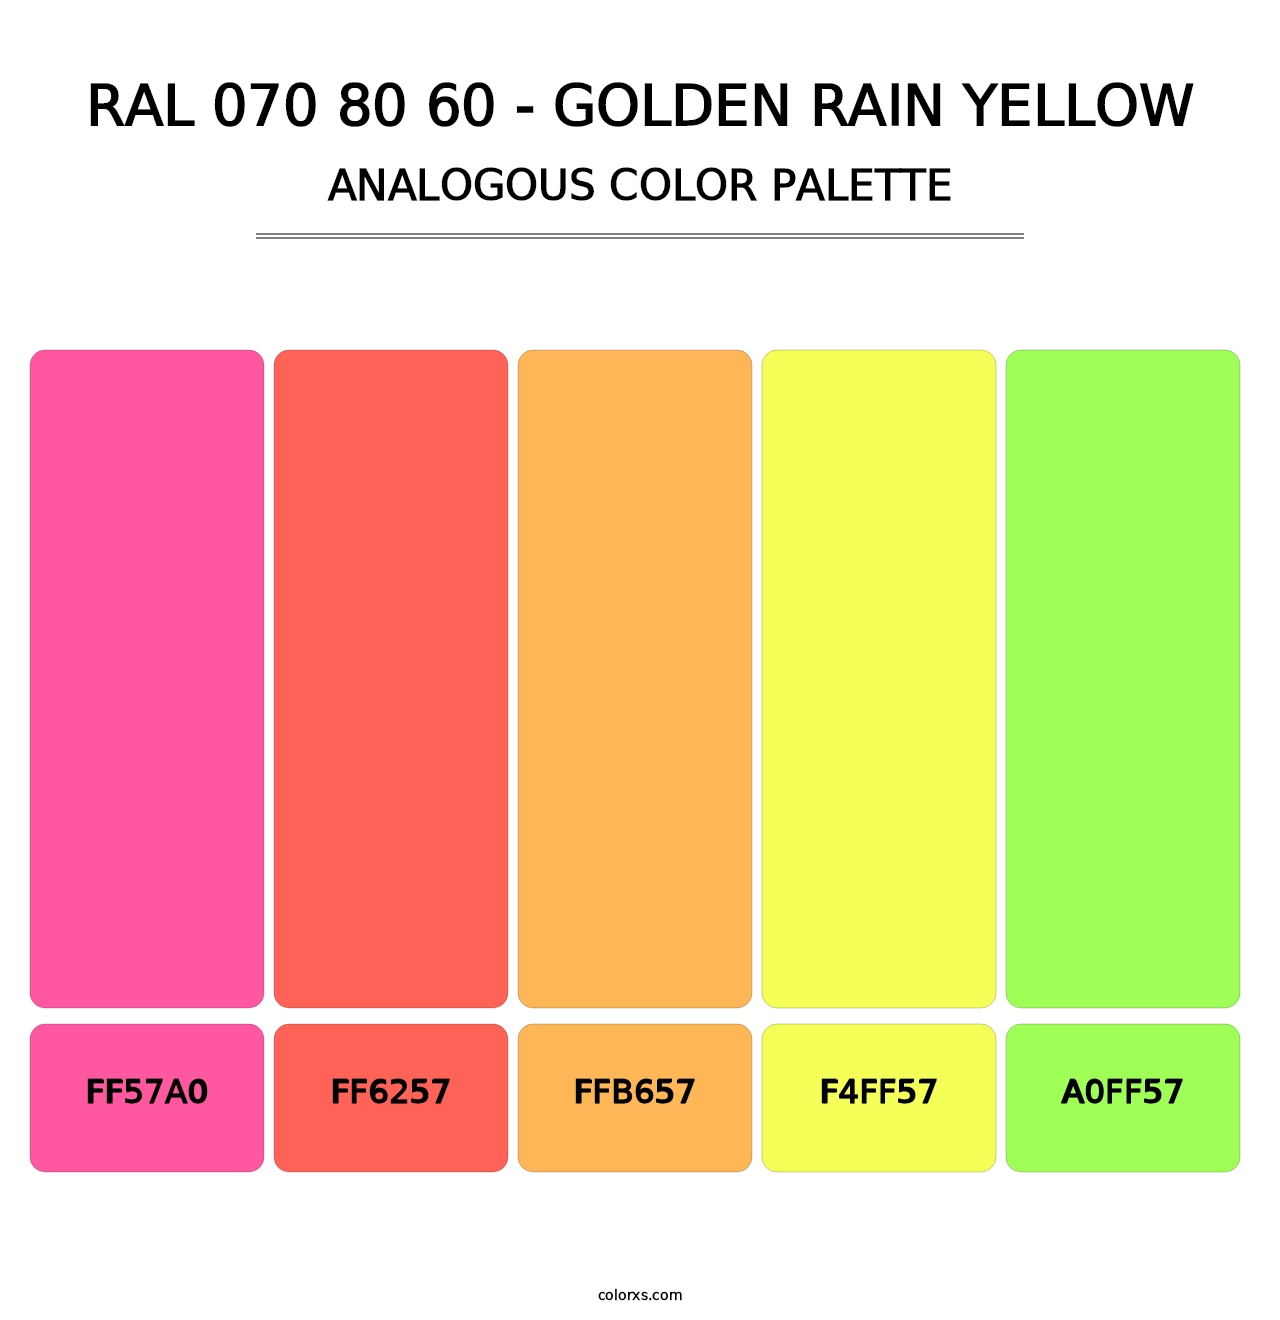 RAL 070 80 60 - Golden Rain Yellow - Analogous Color Palette